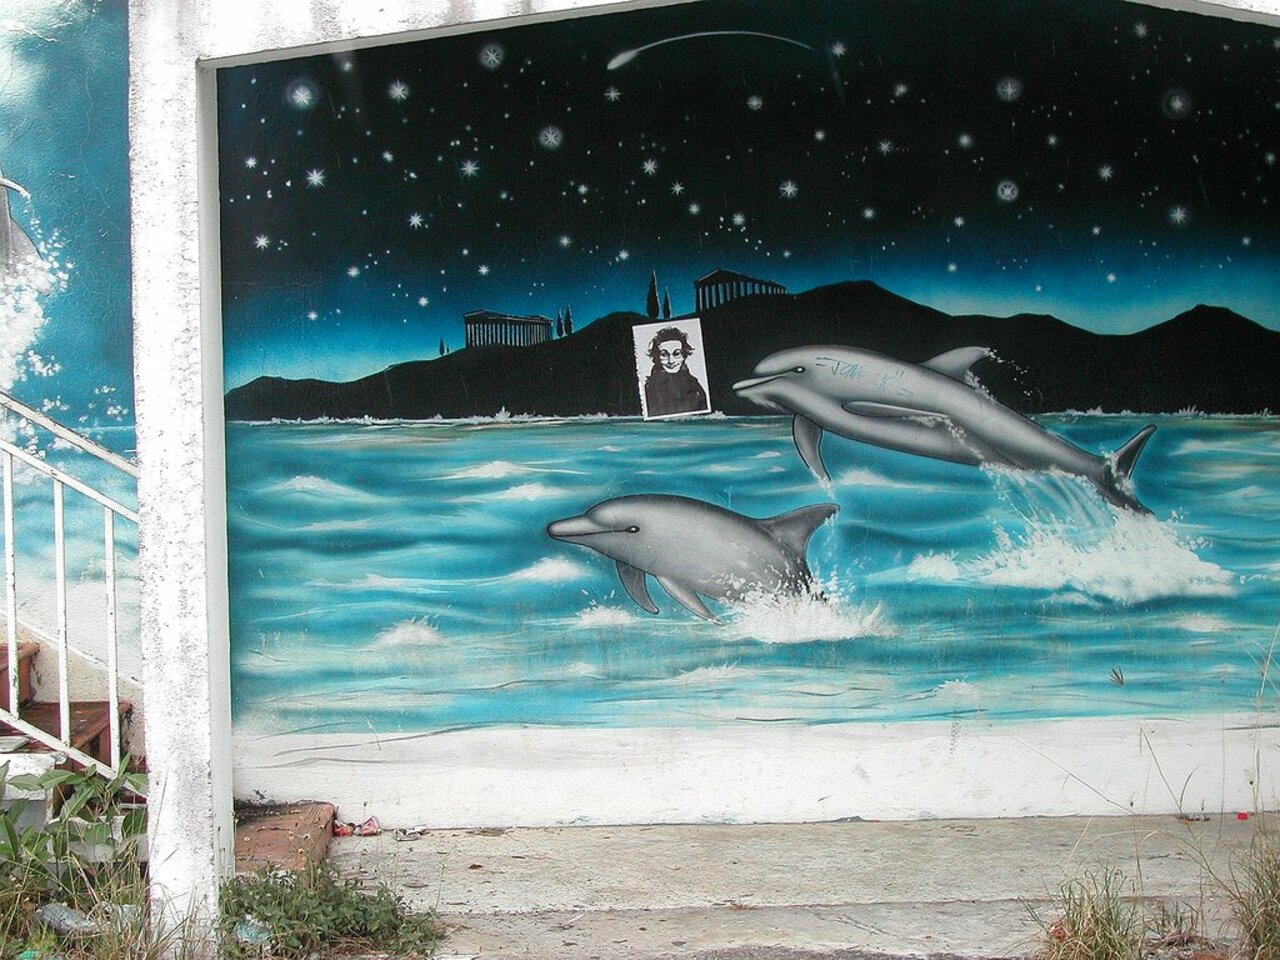 RT urbacolors Street Art by Nojnoma in # http://www.urbacolors.com #art #mural #graffiti #streetart https://t.co/mknIVhSFym